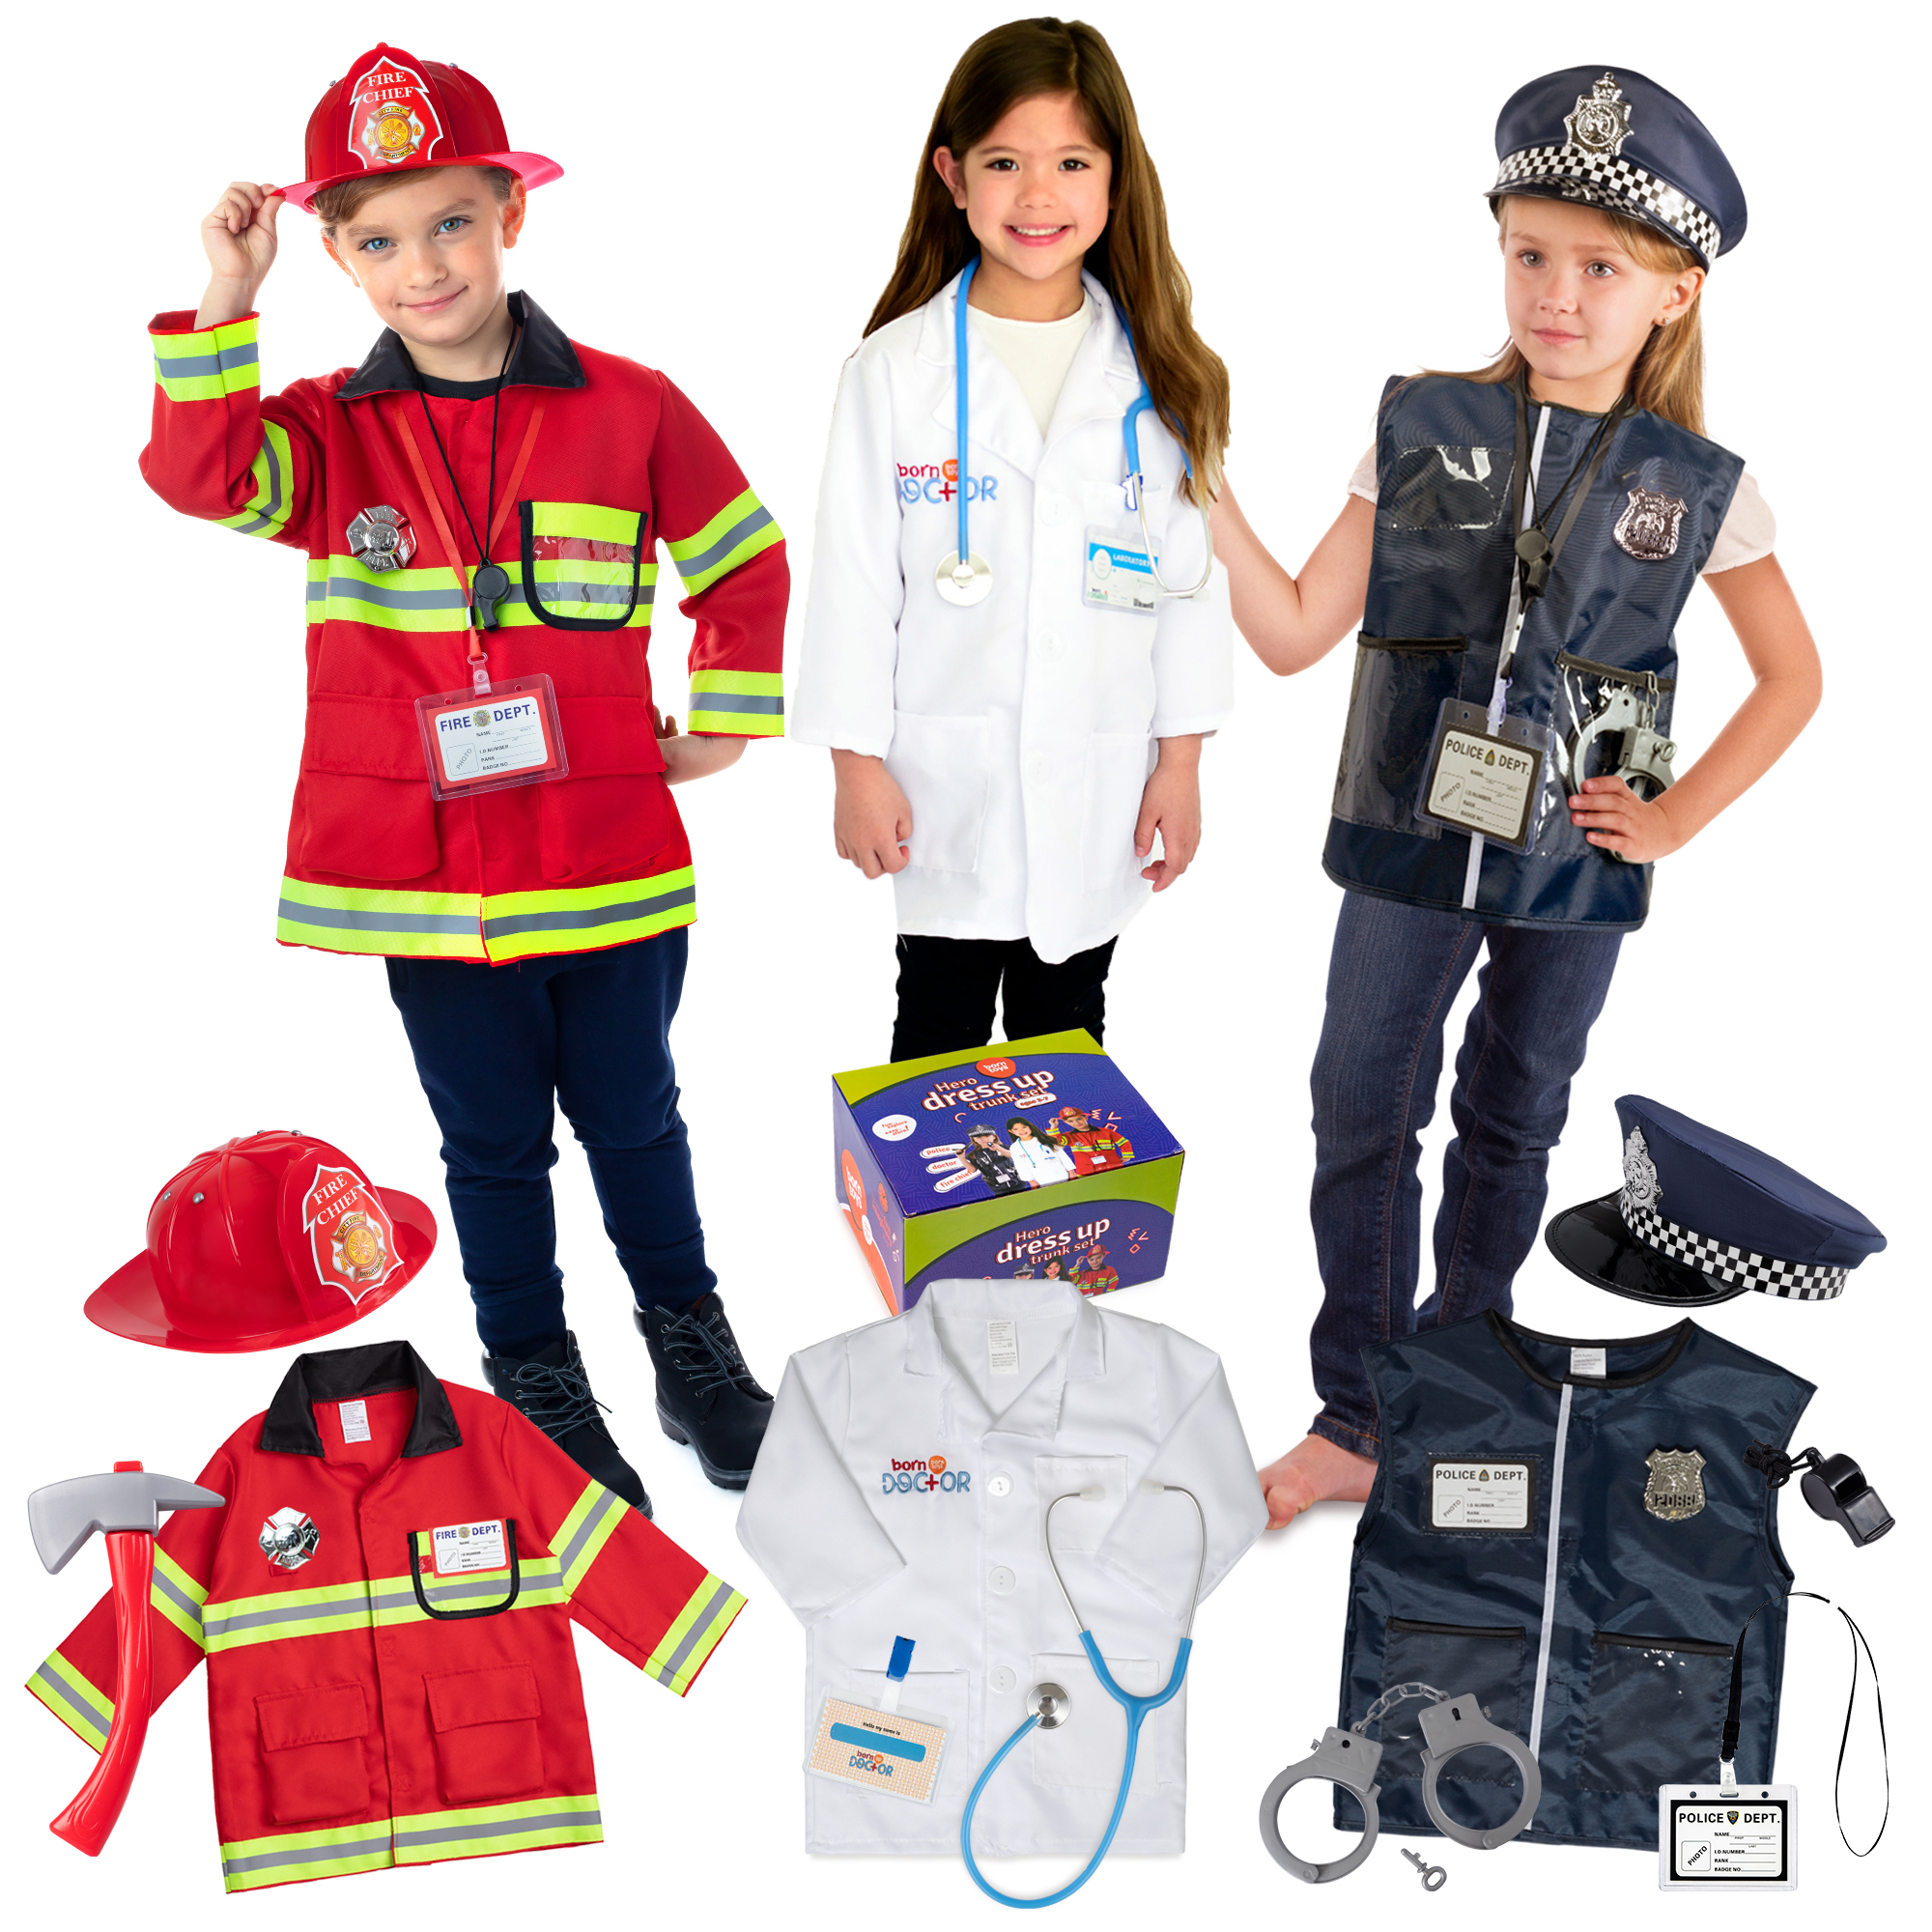 Bintiva Dress Up / Drama Play Hero Trunk Set, Fireman-Police-Doctor image number null